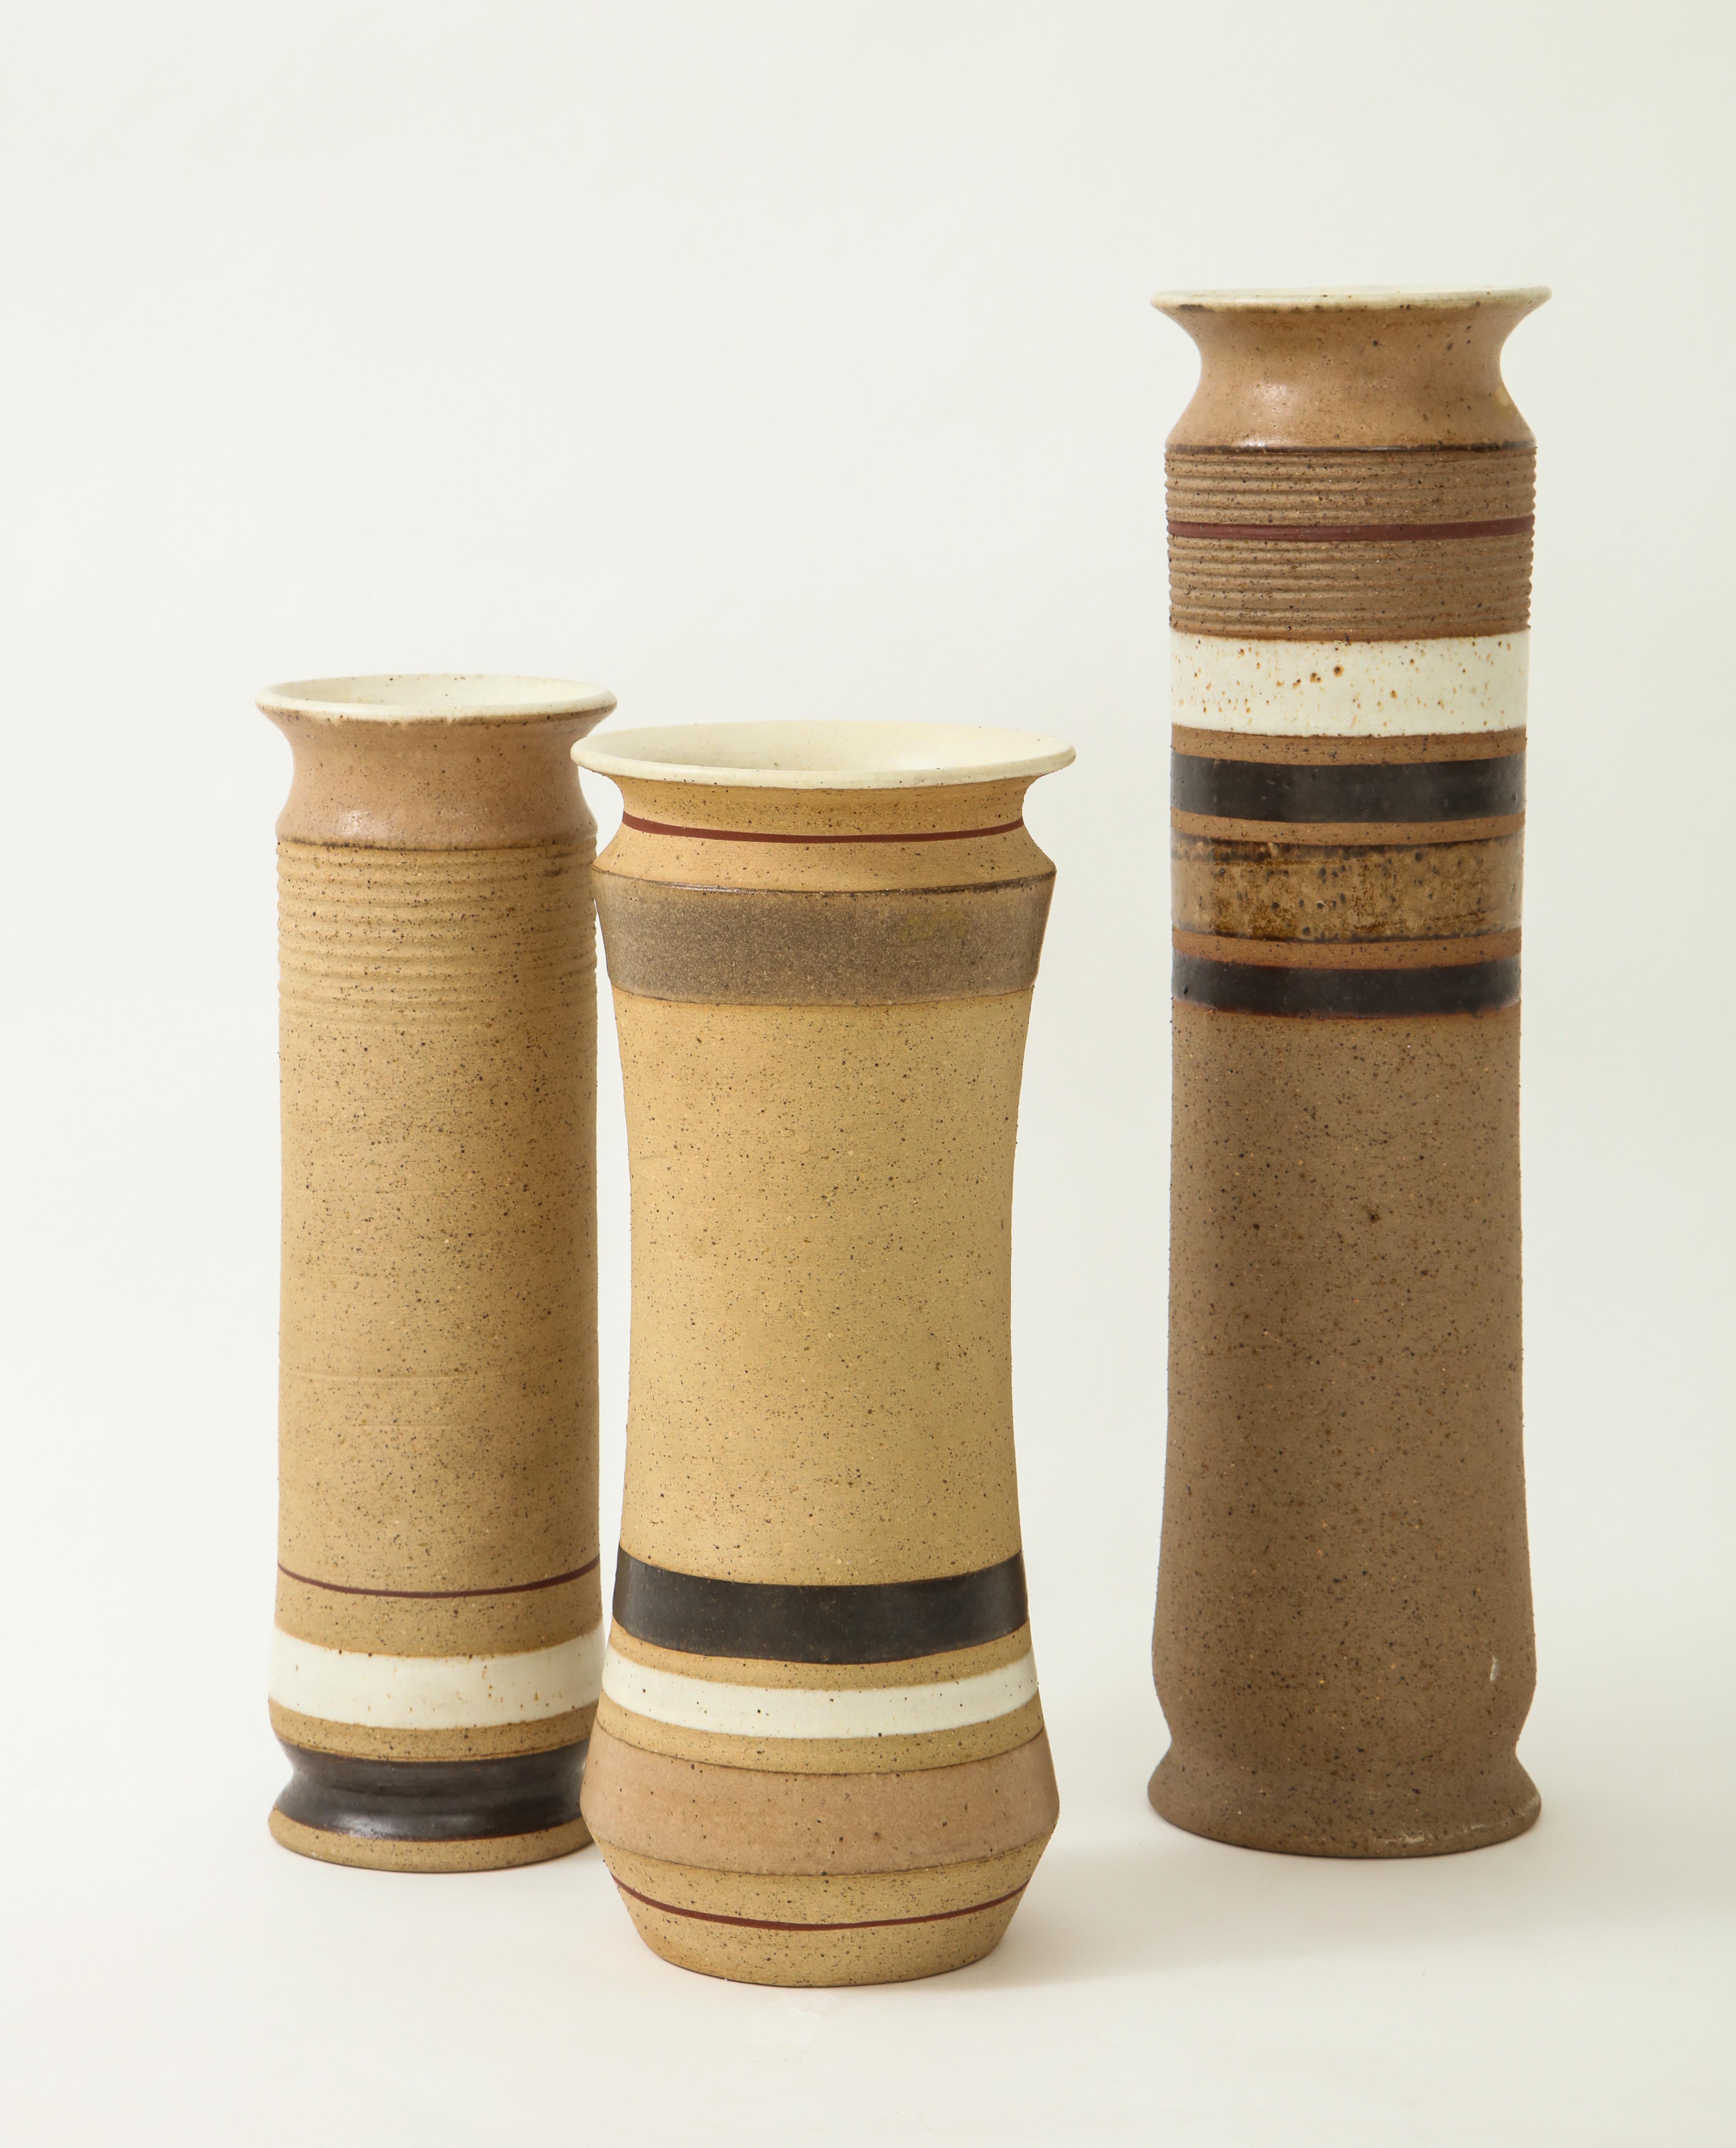 Set of 3 ceramic vases signed on underside 'GAMBONE ITALY'.